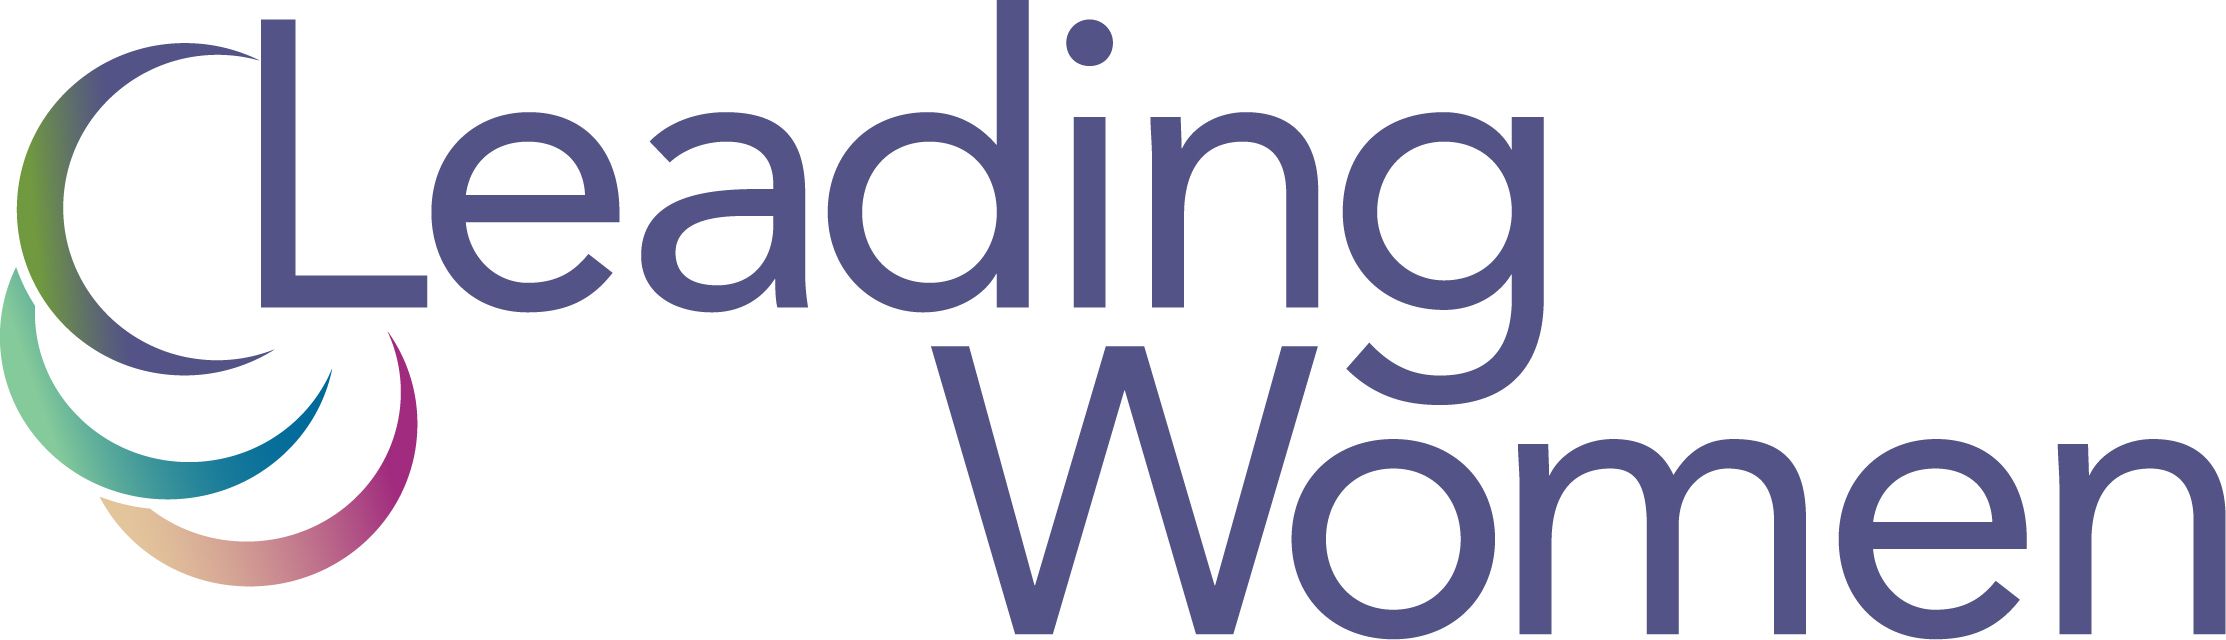 Leading NOW, llc. Logo